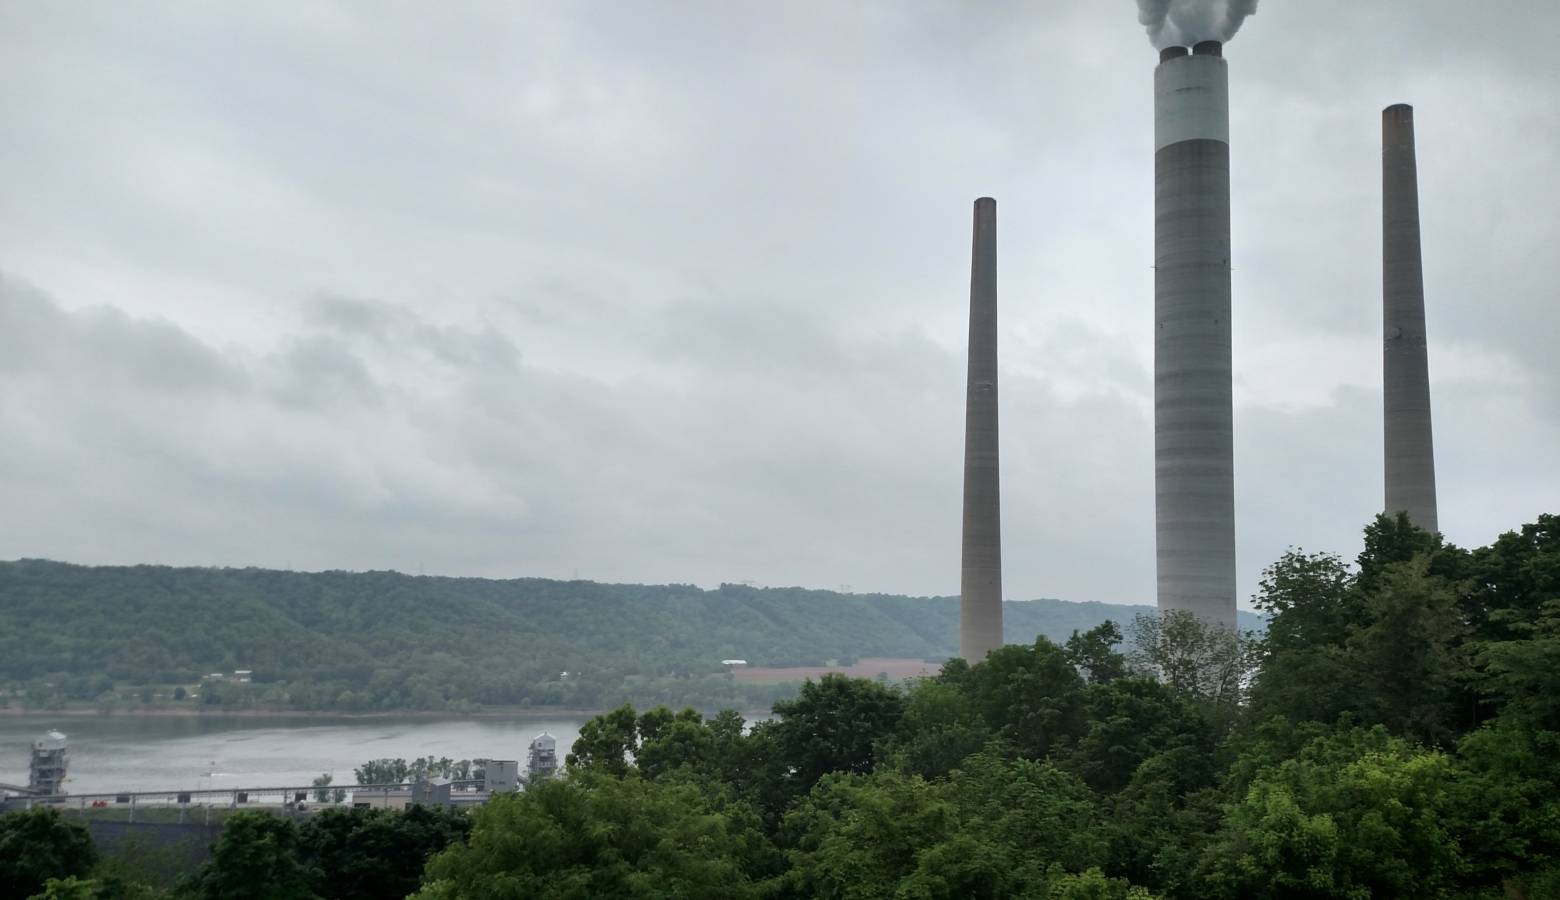 The Clifty Creek Power Plant near Madison, Indiana (Wikimedia Commons)